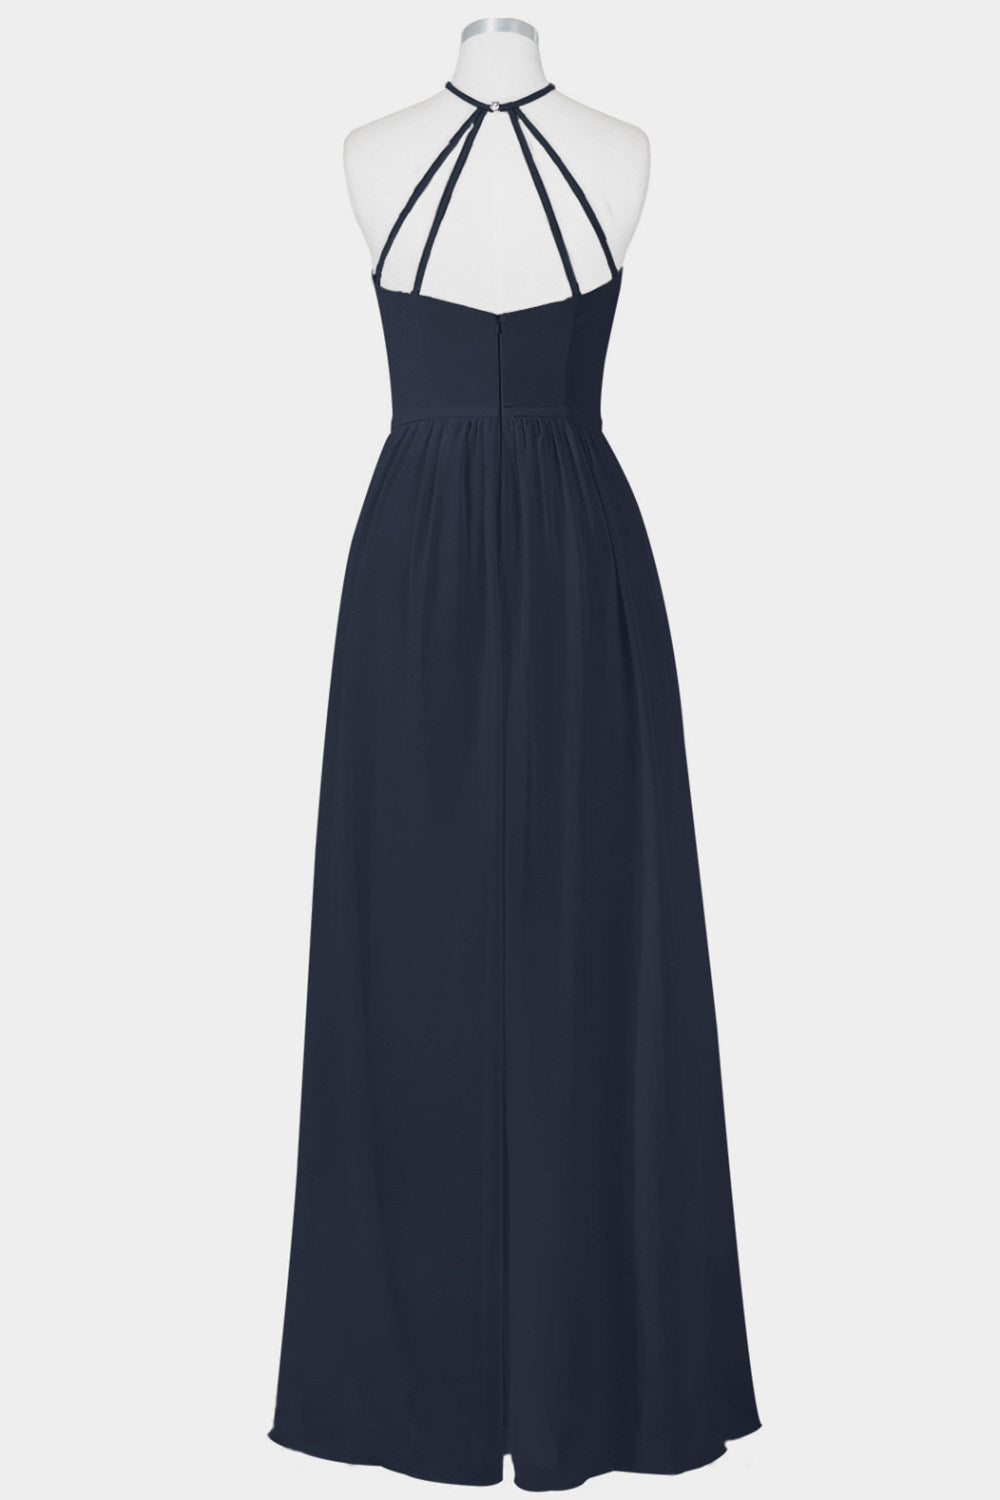 Elegant Navy Blue Chiffon A-line Long Bridesmaid Dress